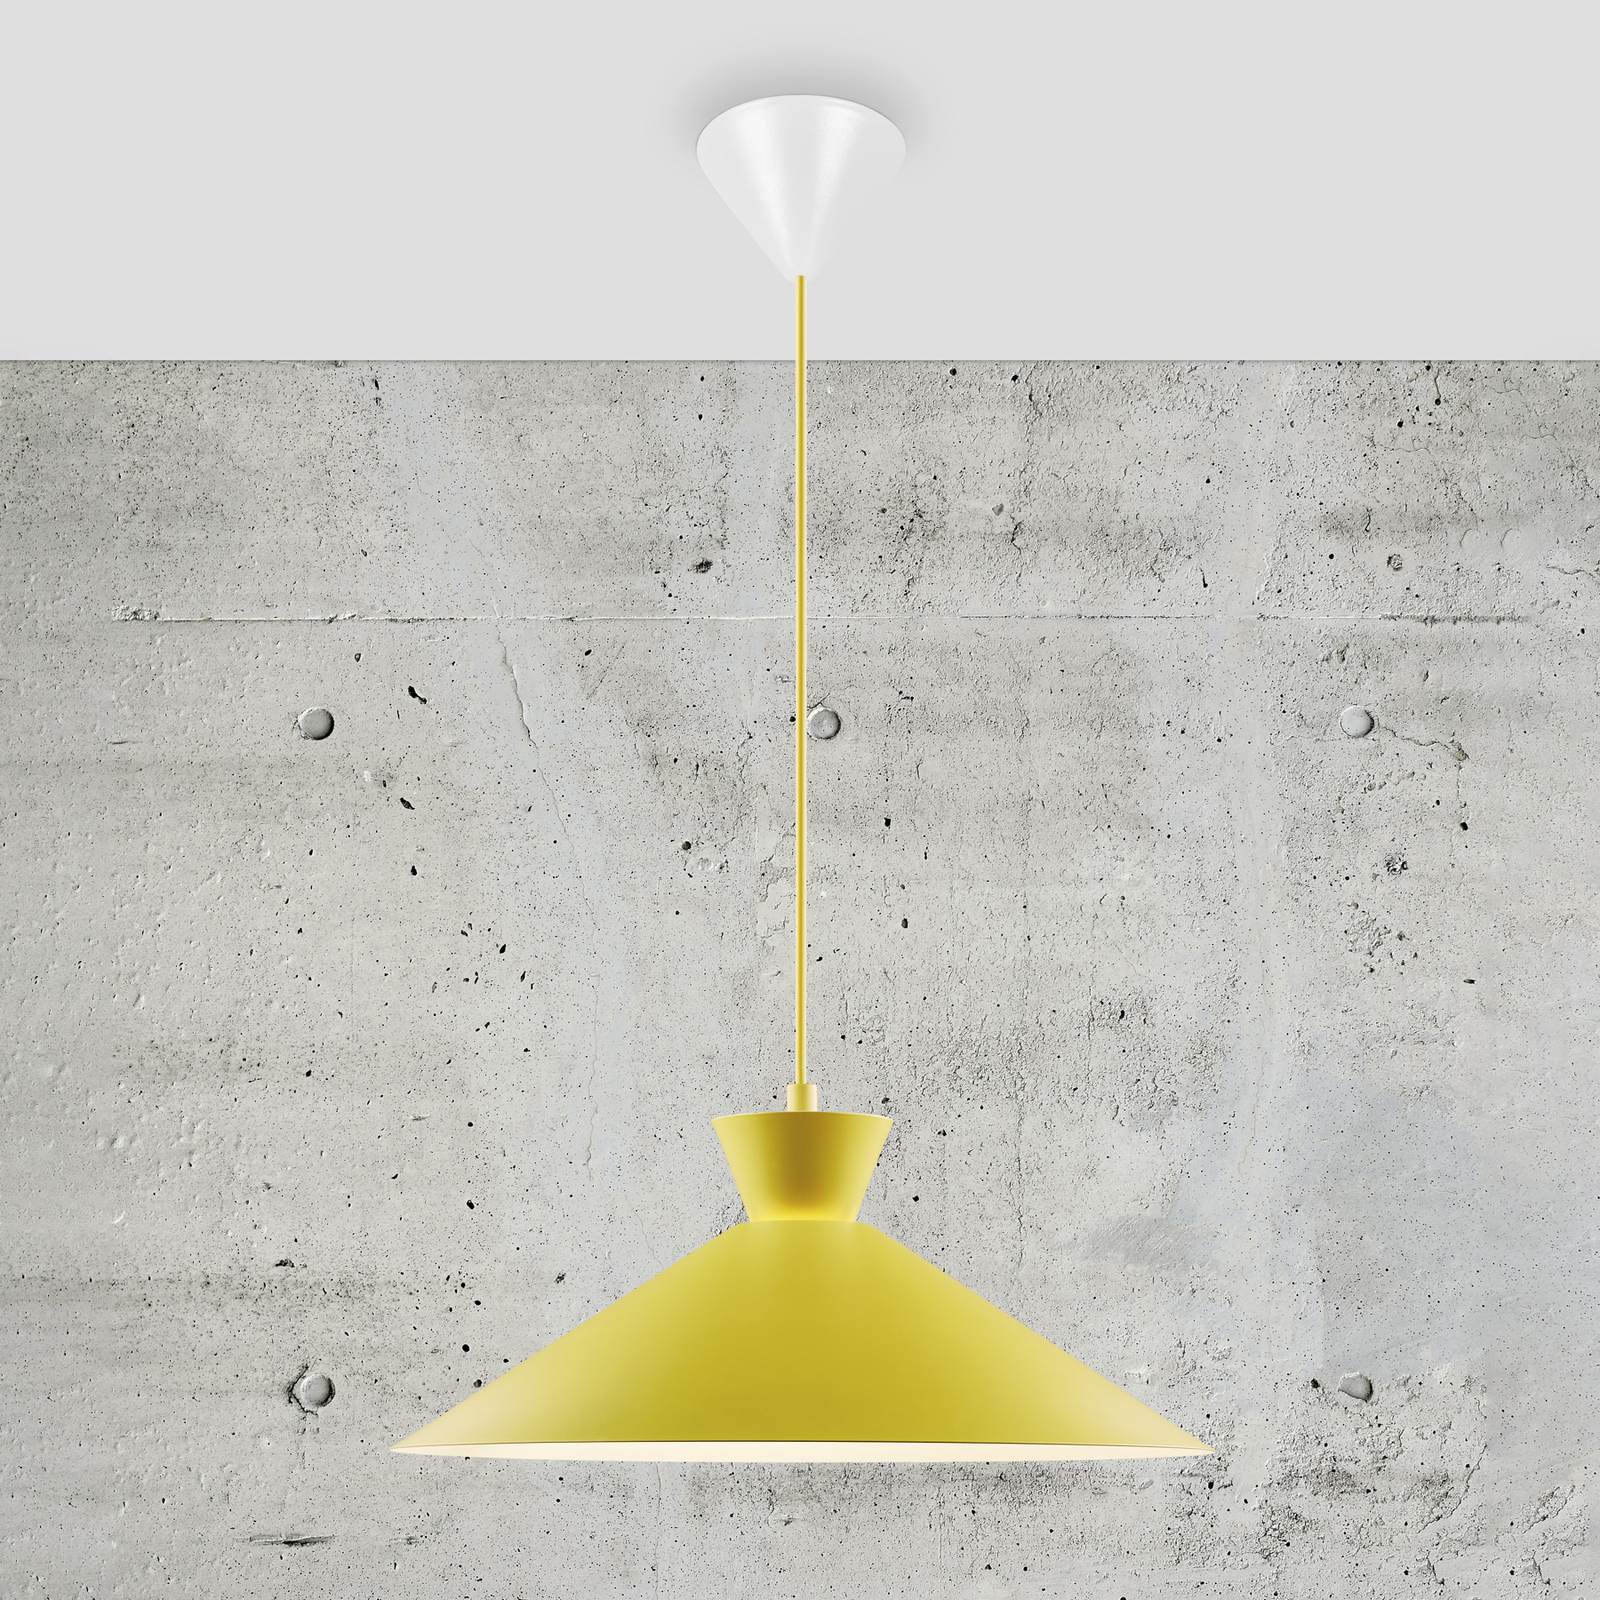 Dial pendant light with metal shade, yellow, Ø 45 cm